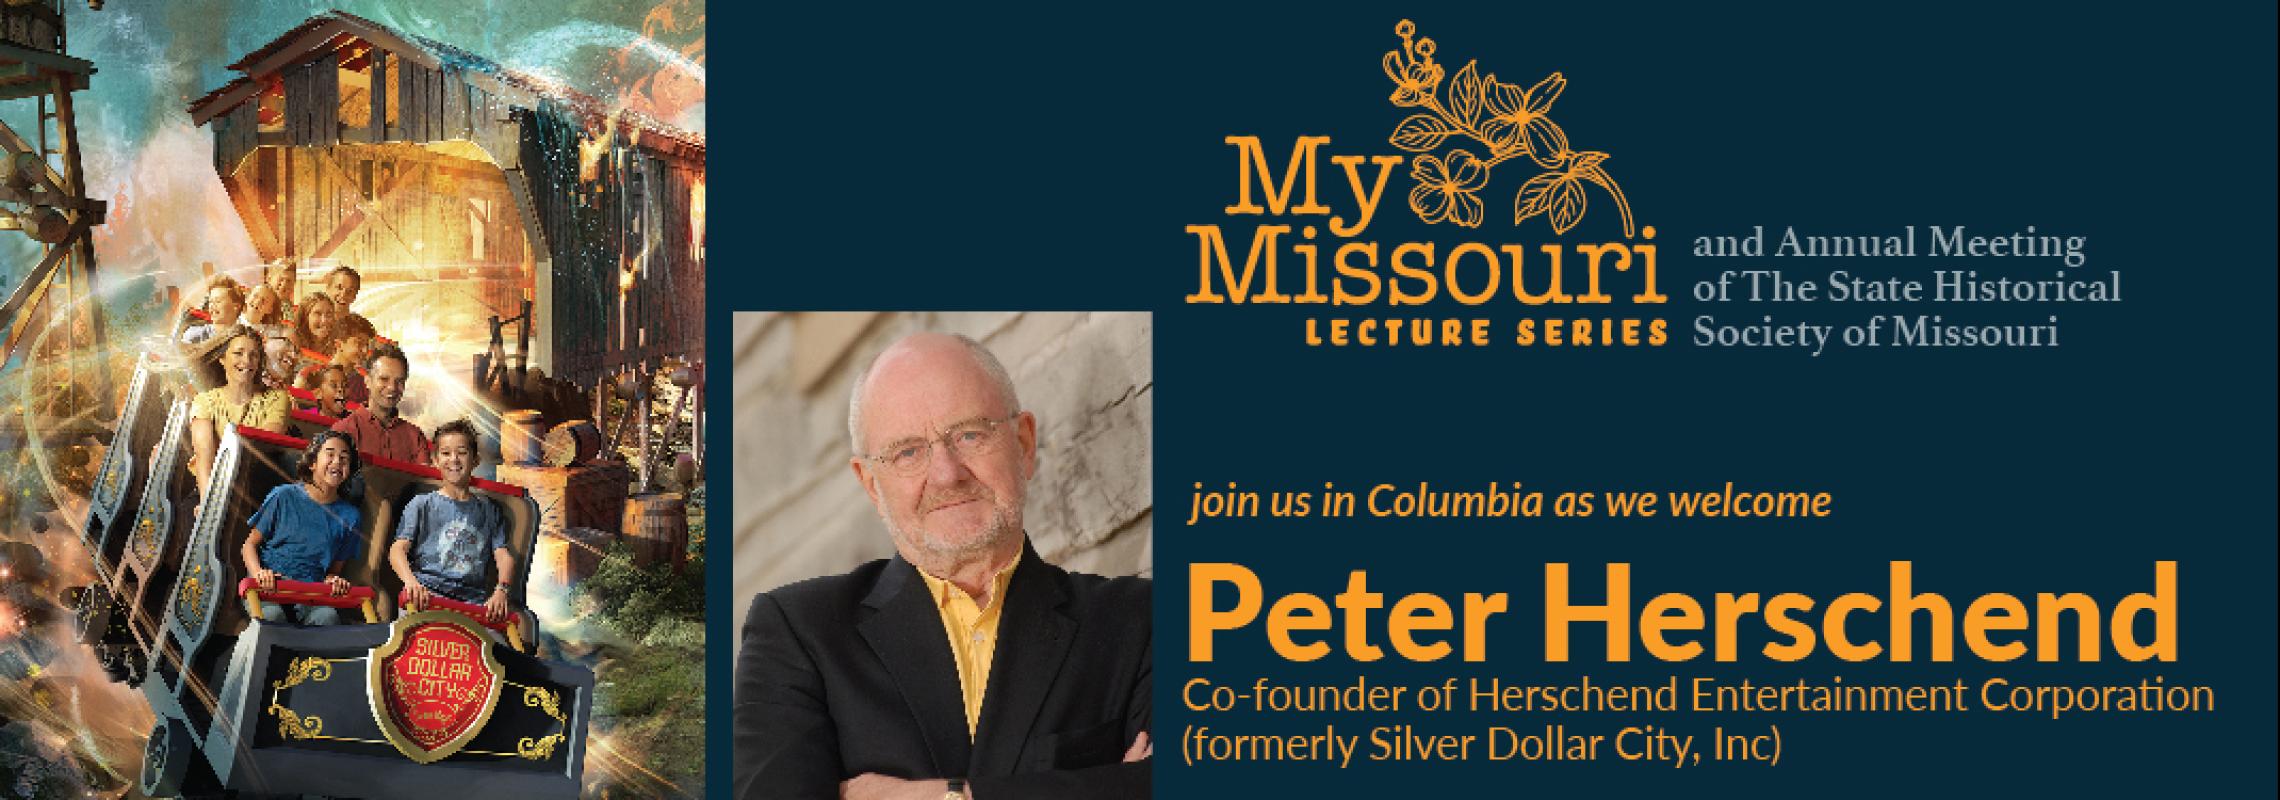 My Missouri Lecture with Peter Herschend